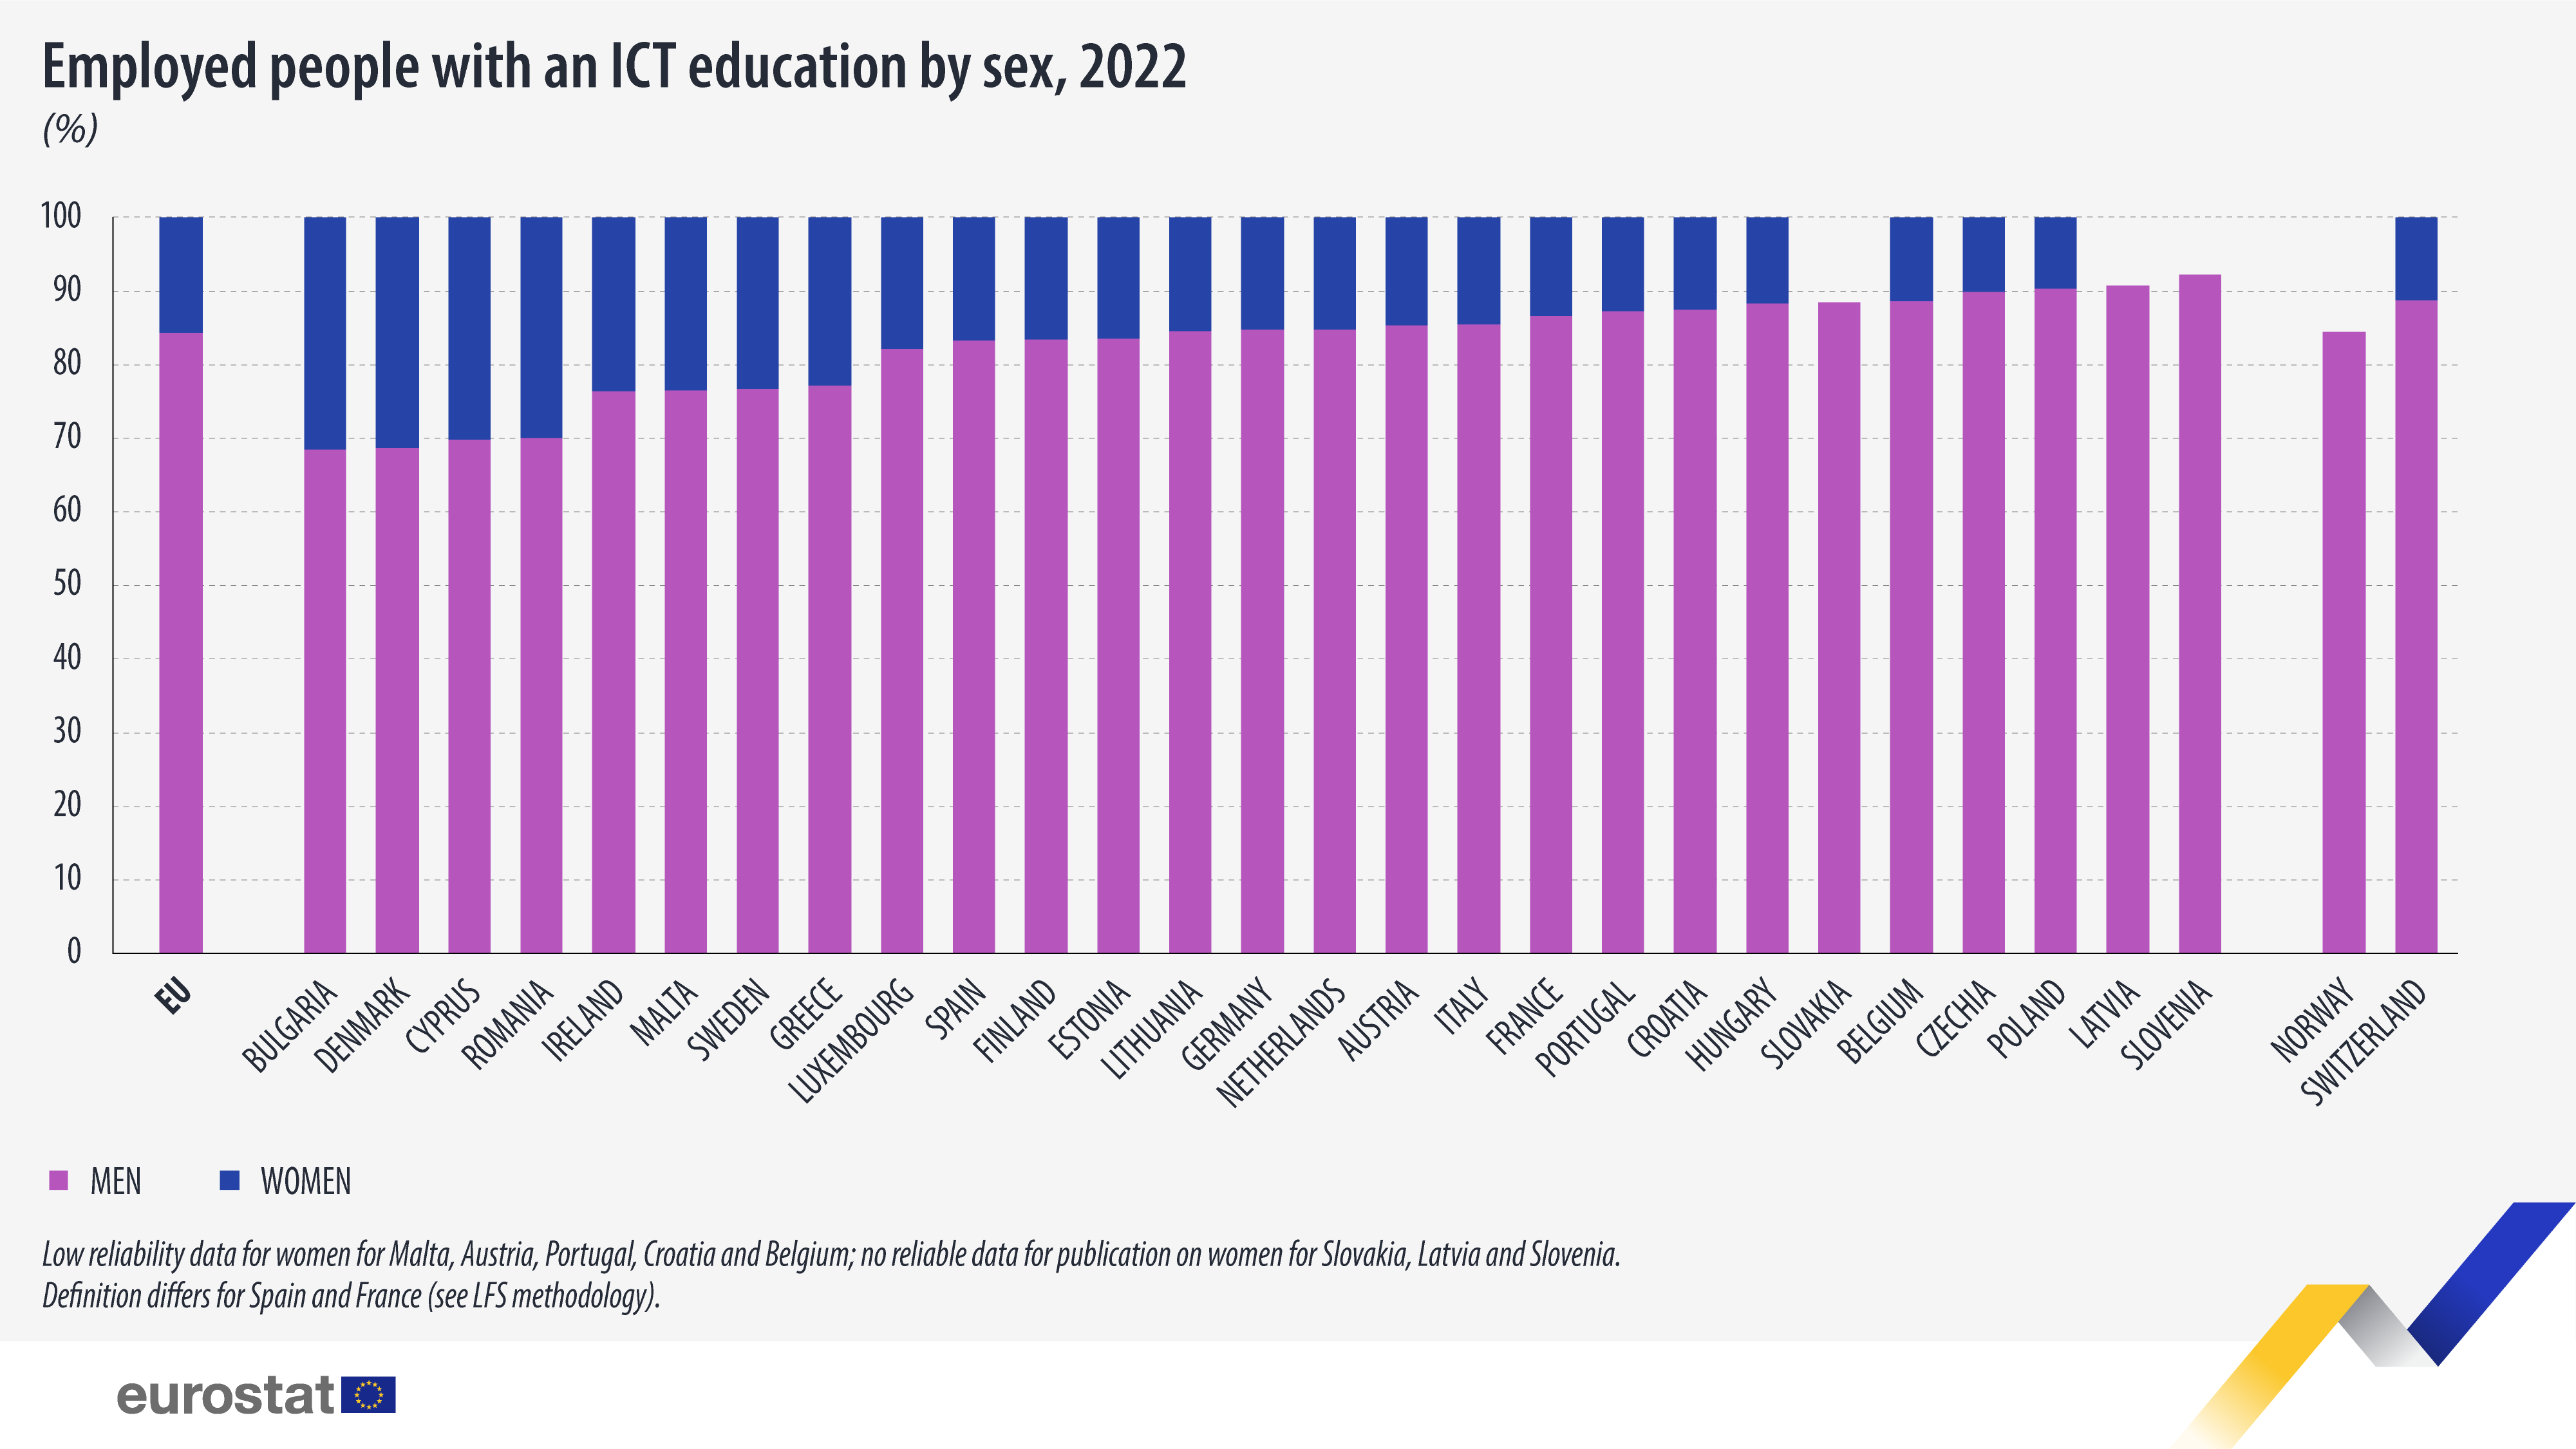 Trakasti grafikon: Zaposleni s ICT obrazovanjem prema spolu, %, 2022.